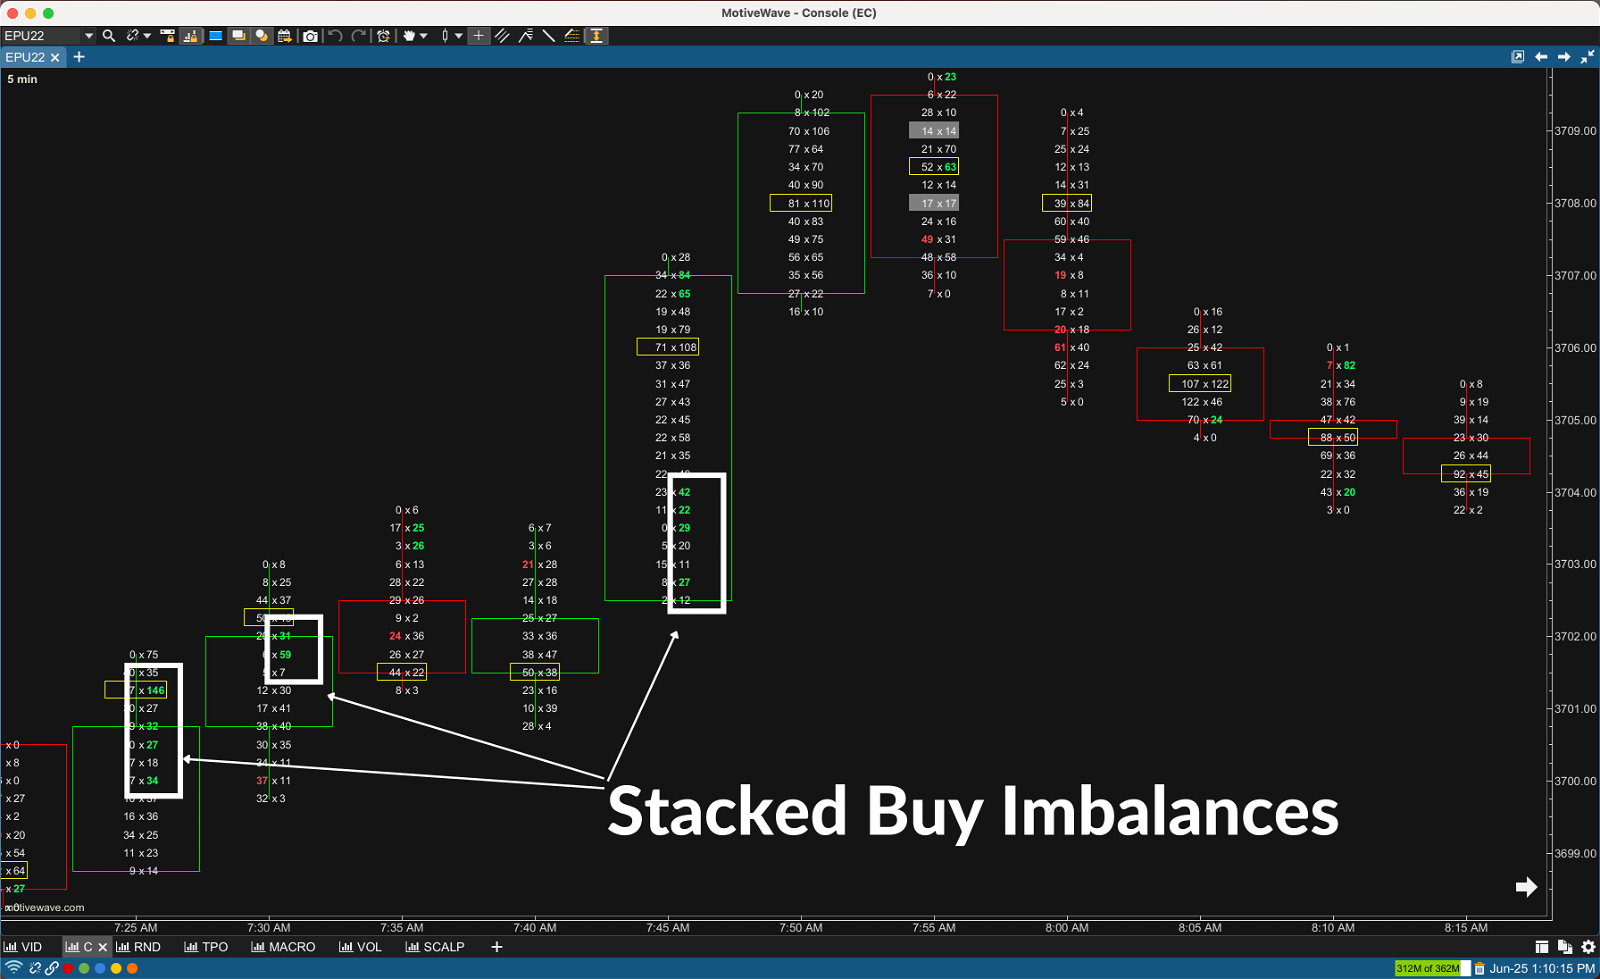 Bid/Ask Footprint Chart with Stacked Buy Imbalances